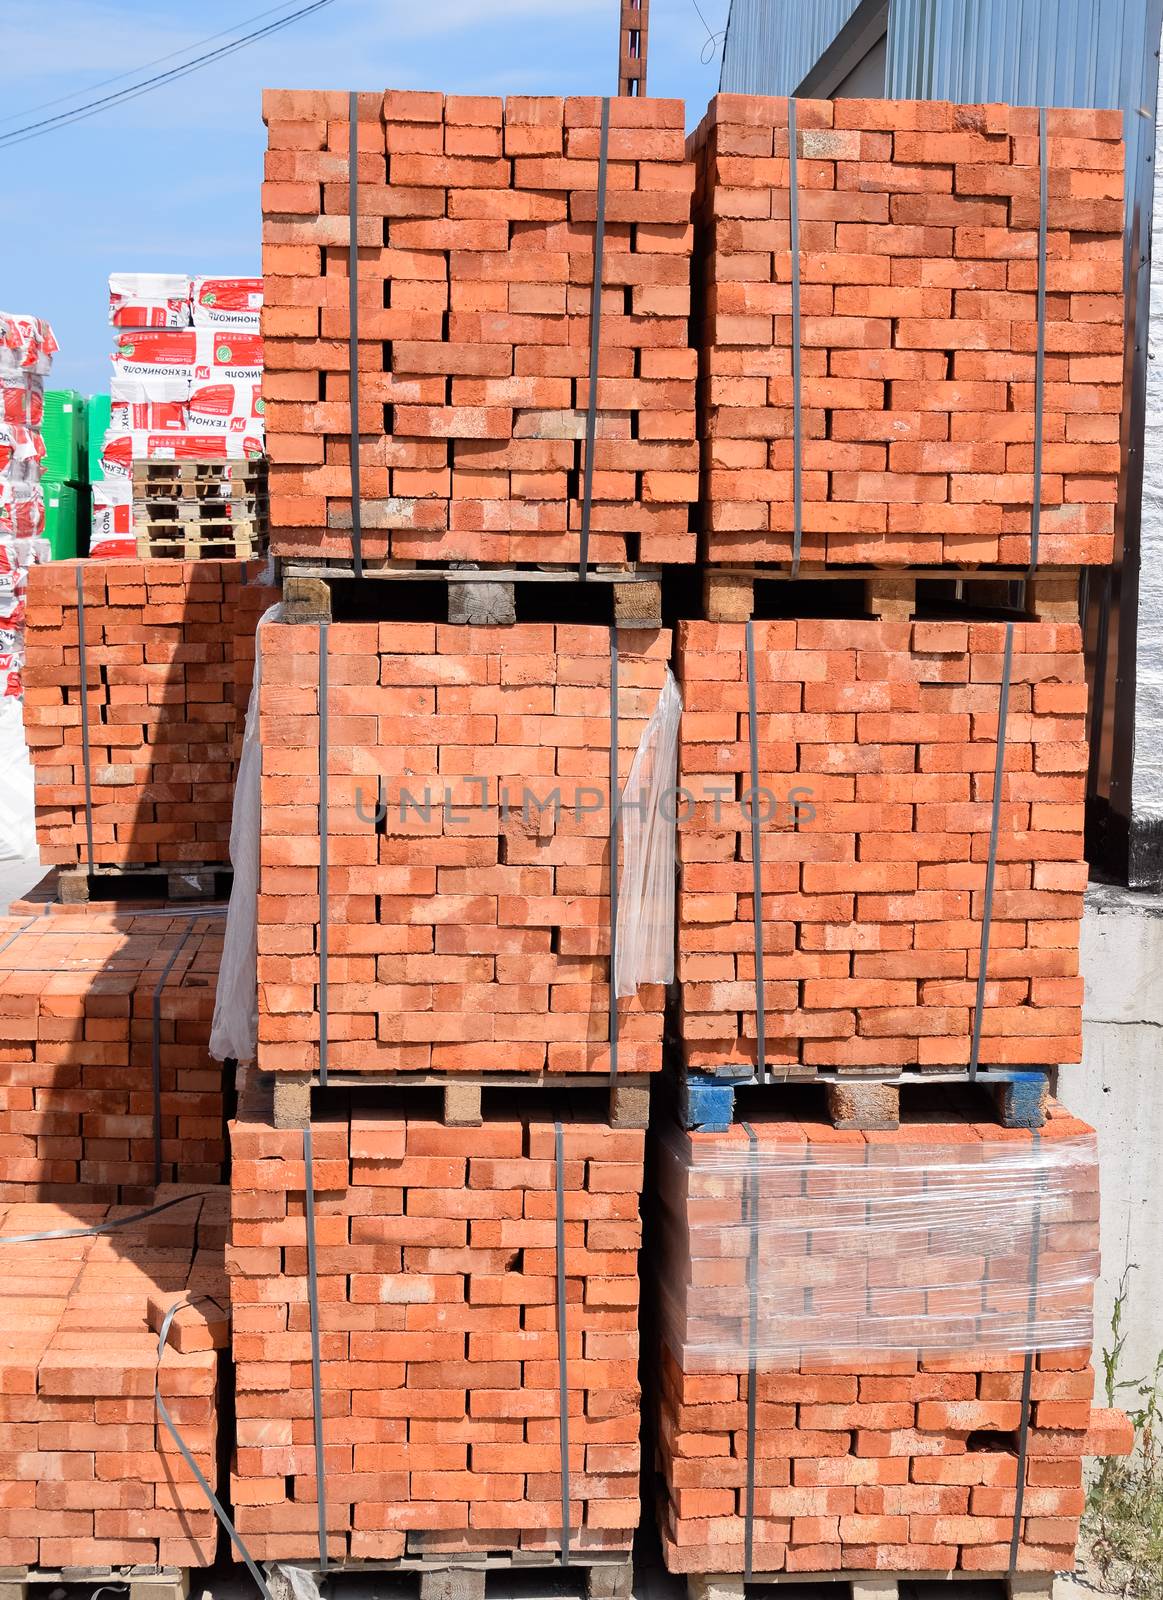 Bricks on pallets. Storage of bricks at the construction site.